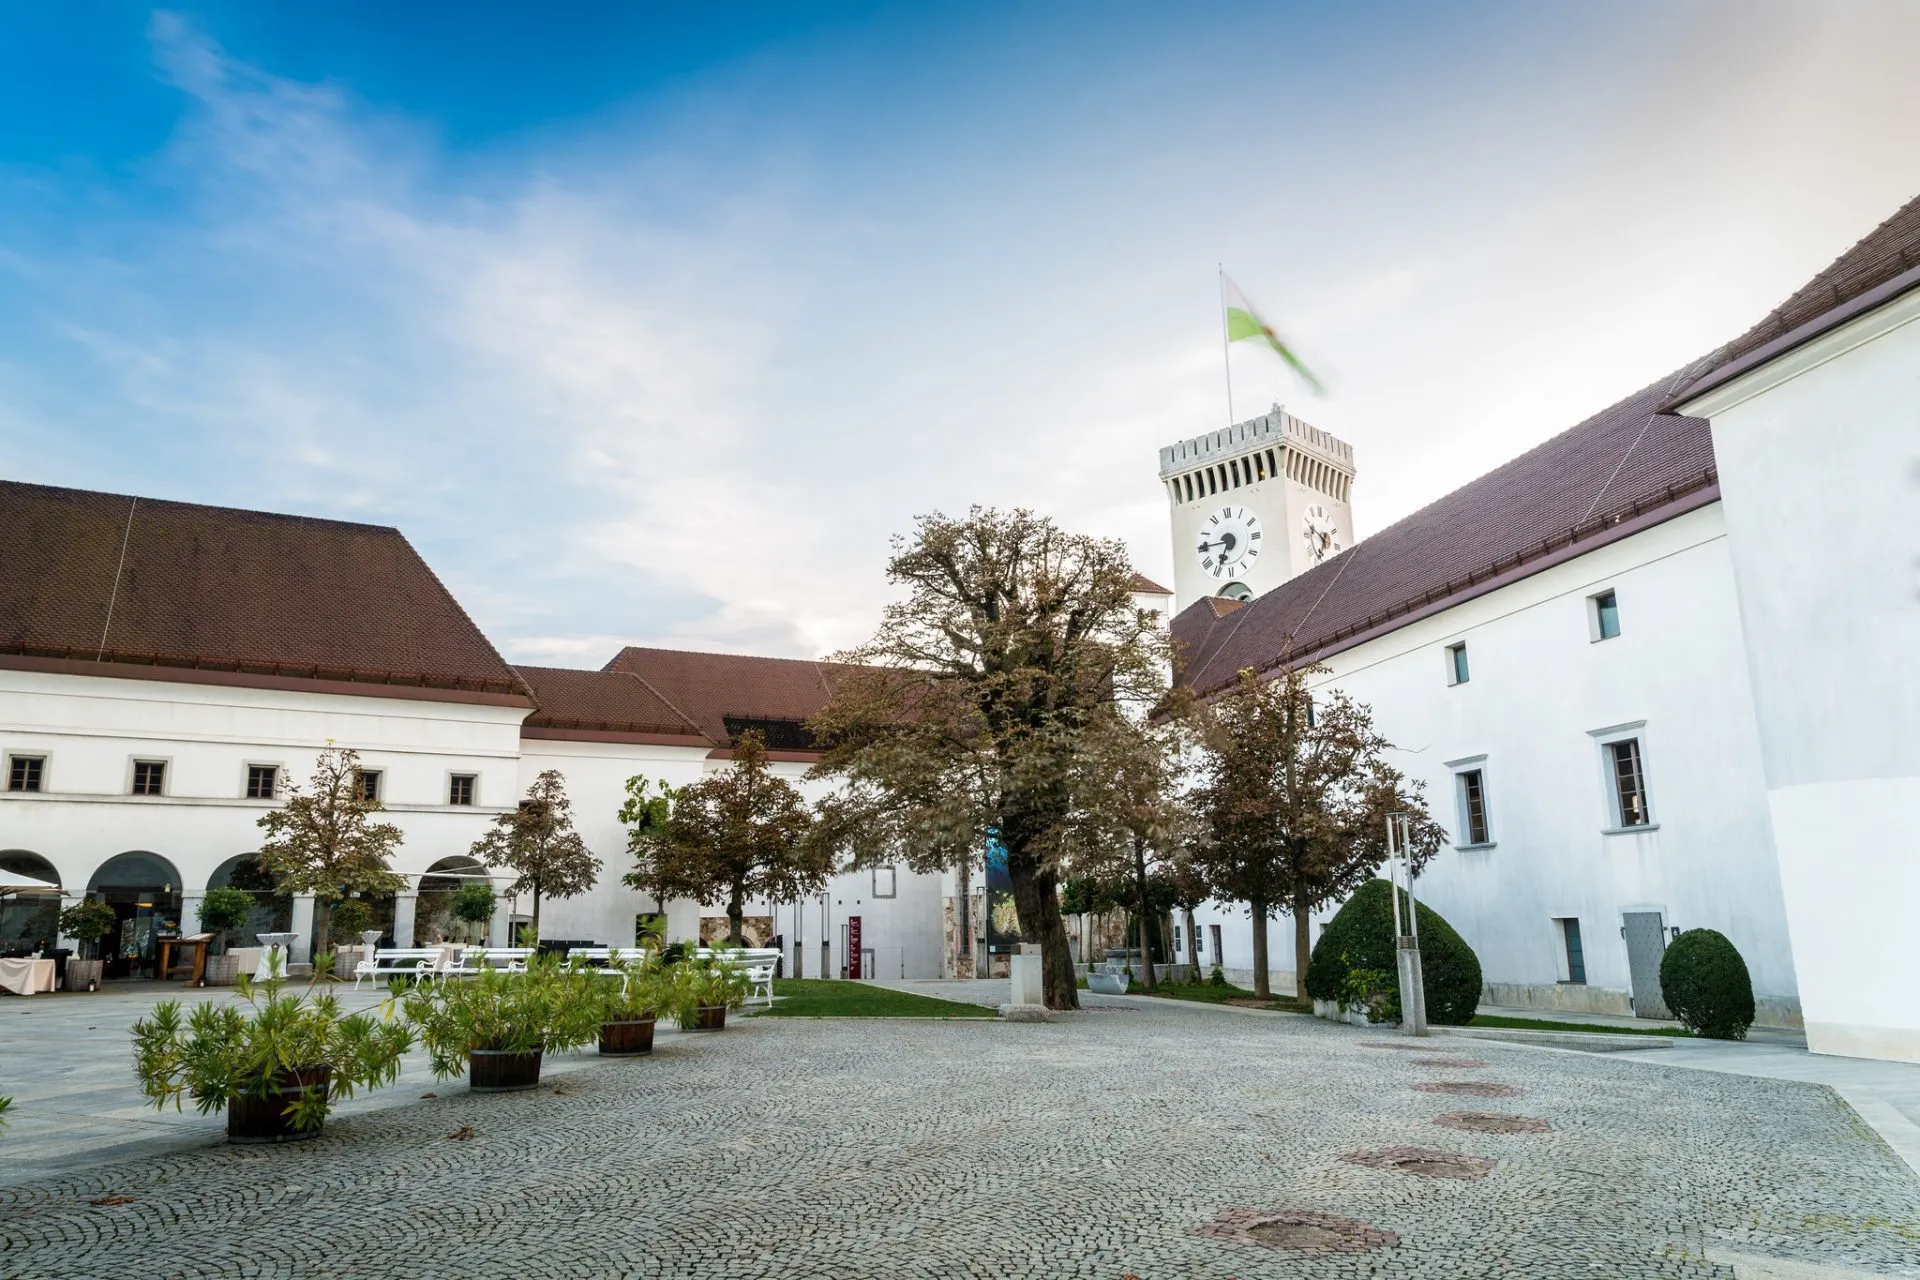 Ljubljanas slott i skala 2